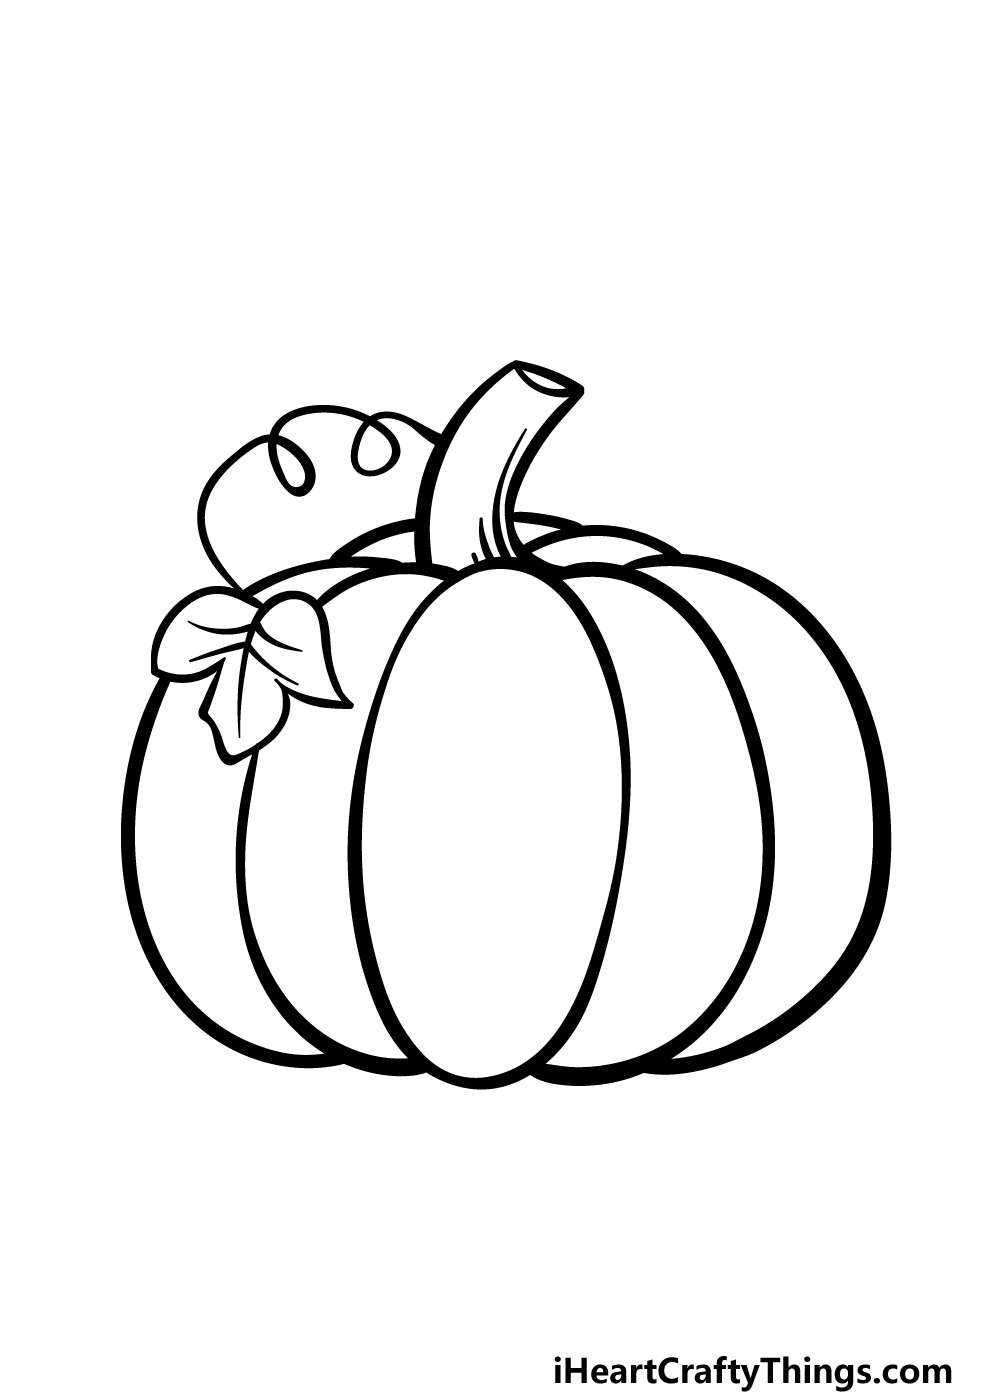 Cartoon Pumpkin Drawing - How To Draw A Cartoon Pumpkin Step By Step